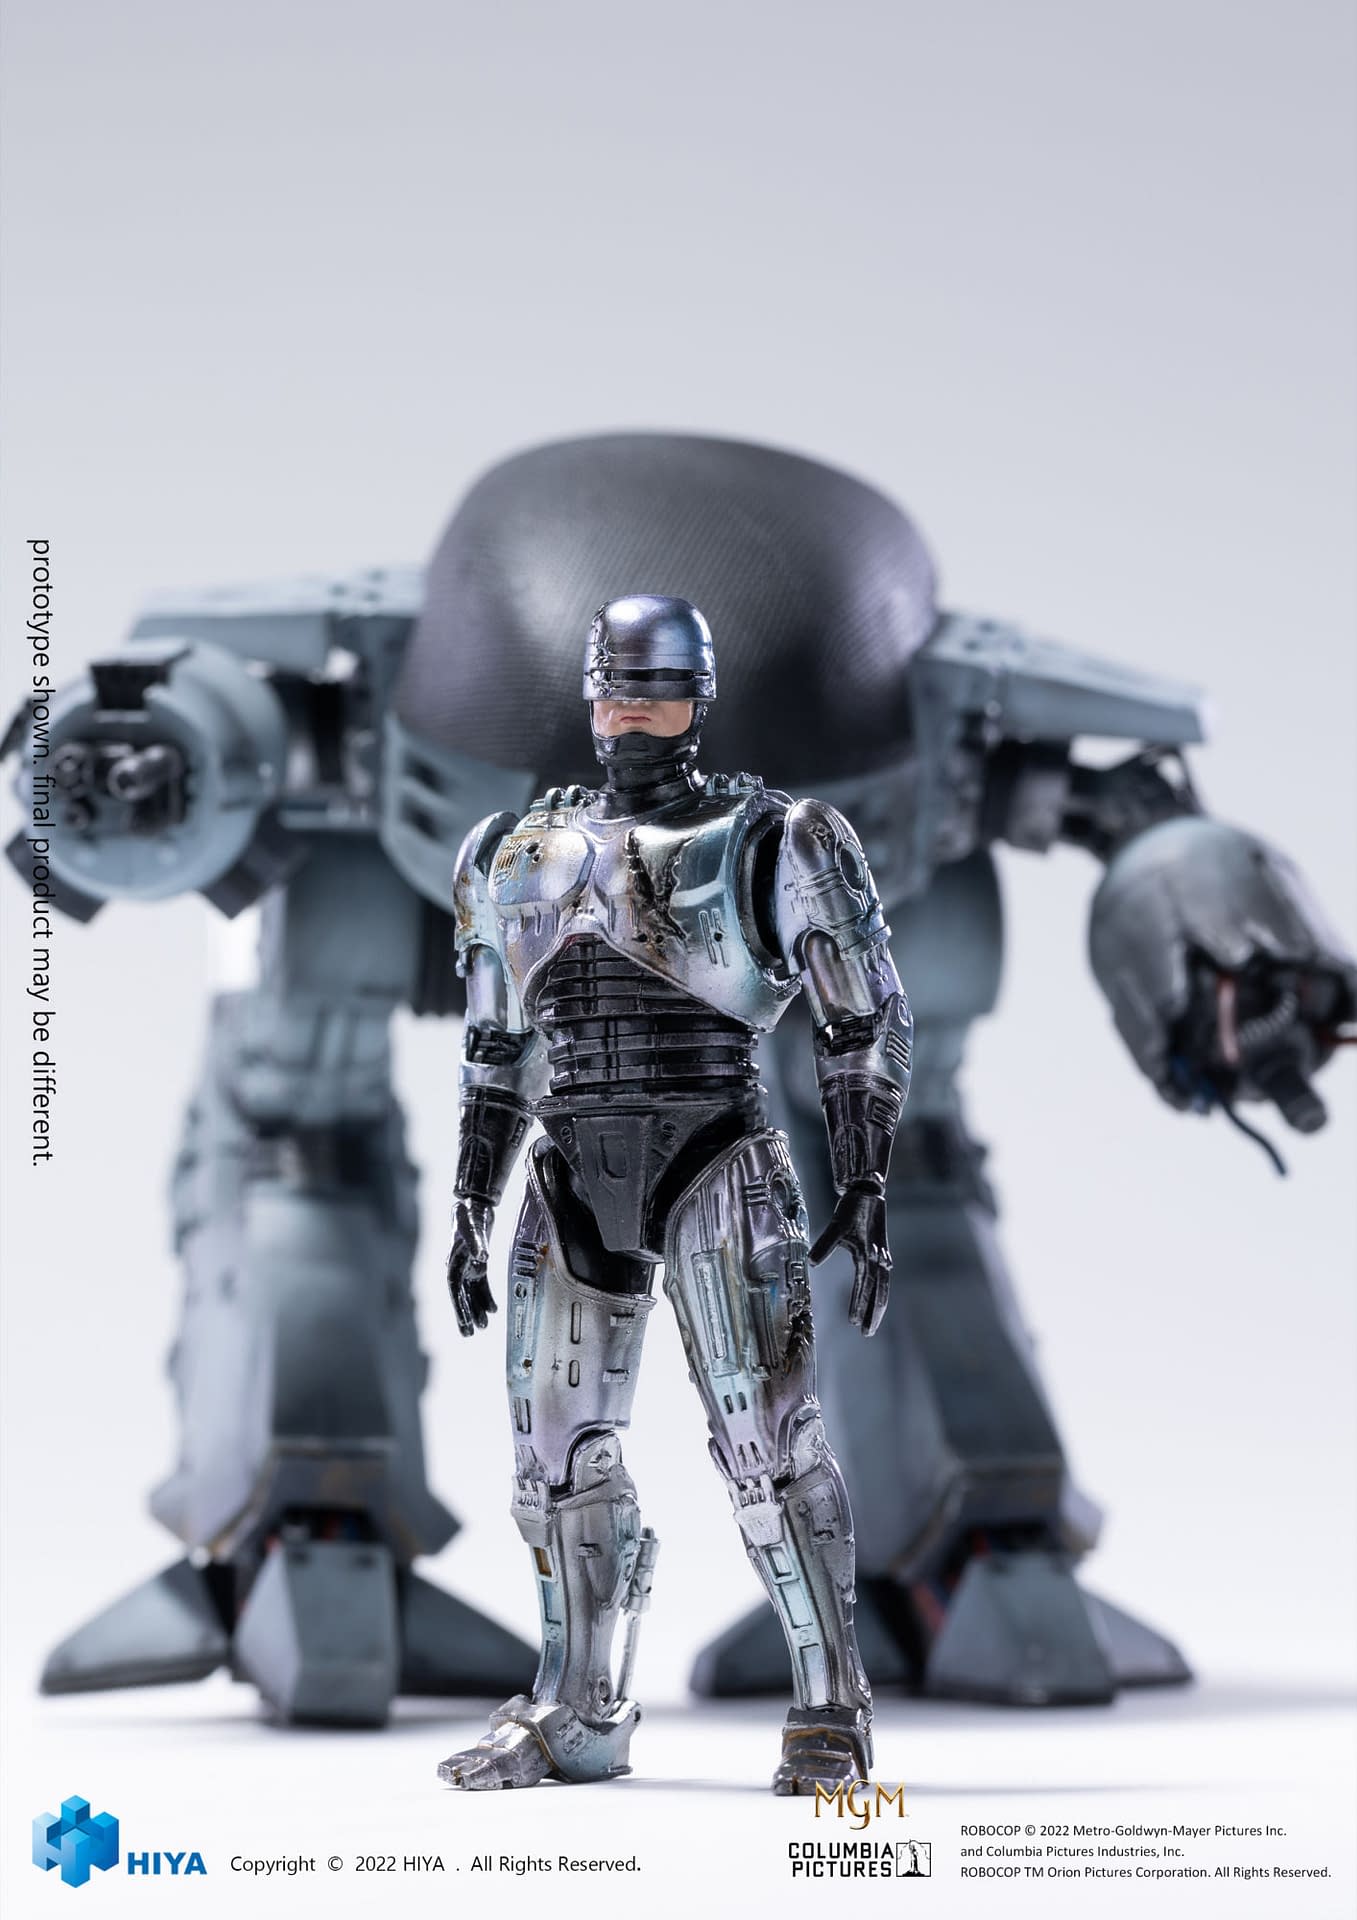 Hiya Toys Debuts Judge Dredd and RoboCop SDCC 22' Exclusive Figures